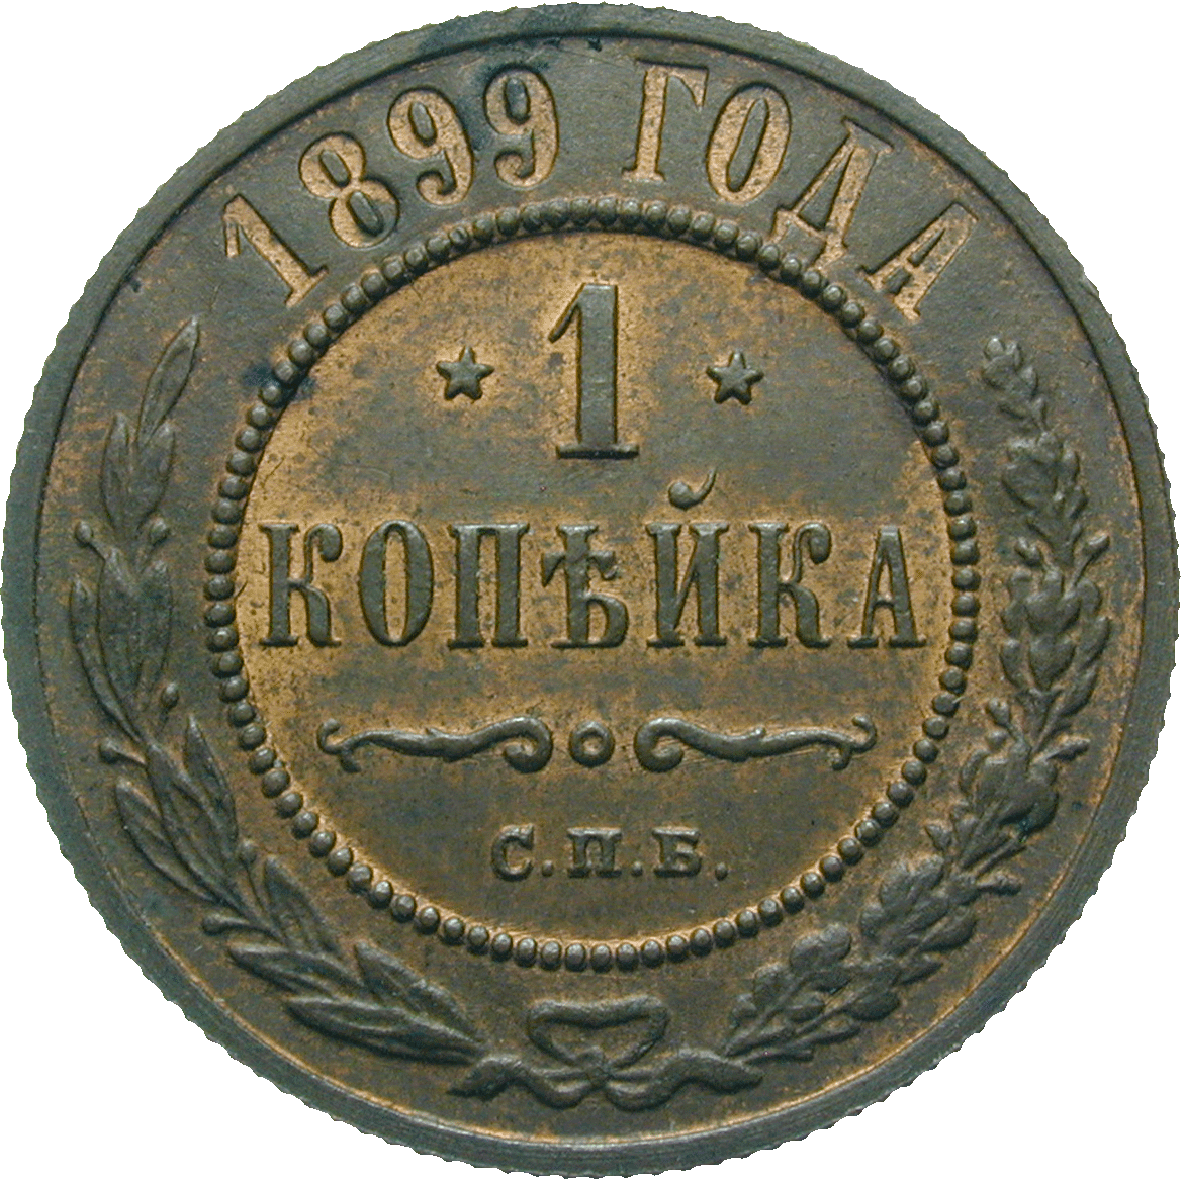 Zarenreich Russland, Nikolaus II., Kopeke 1899 (reverse)